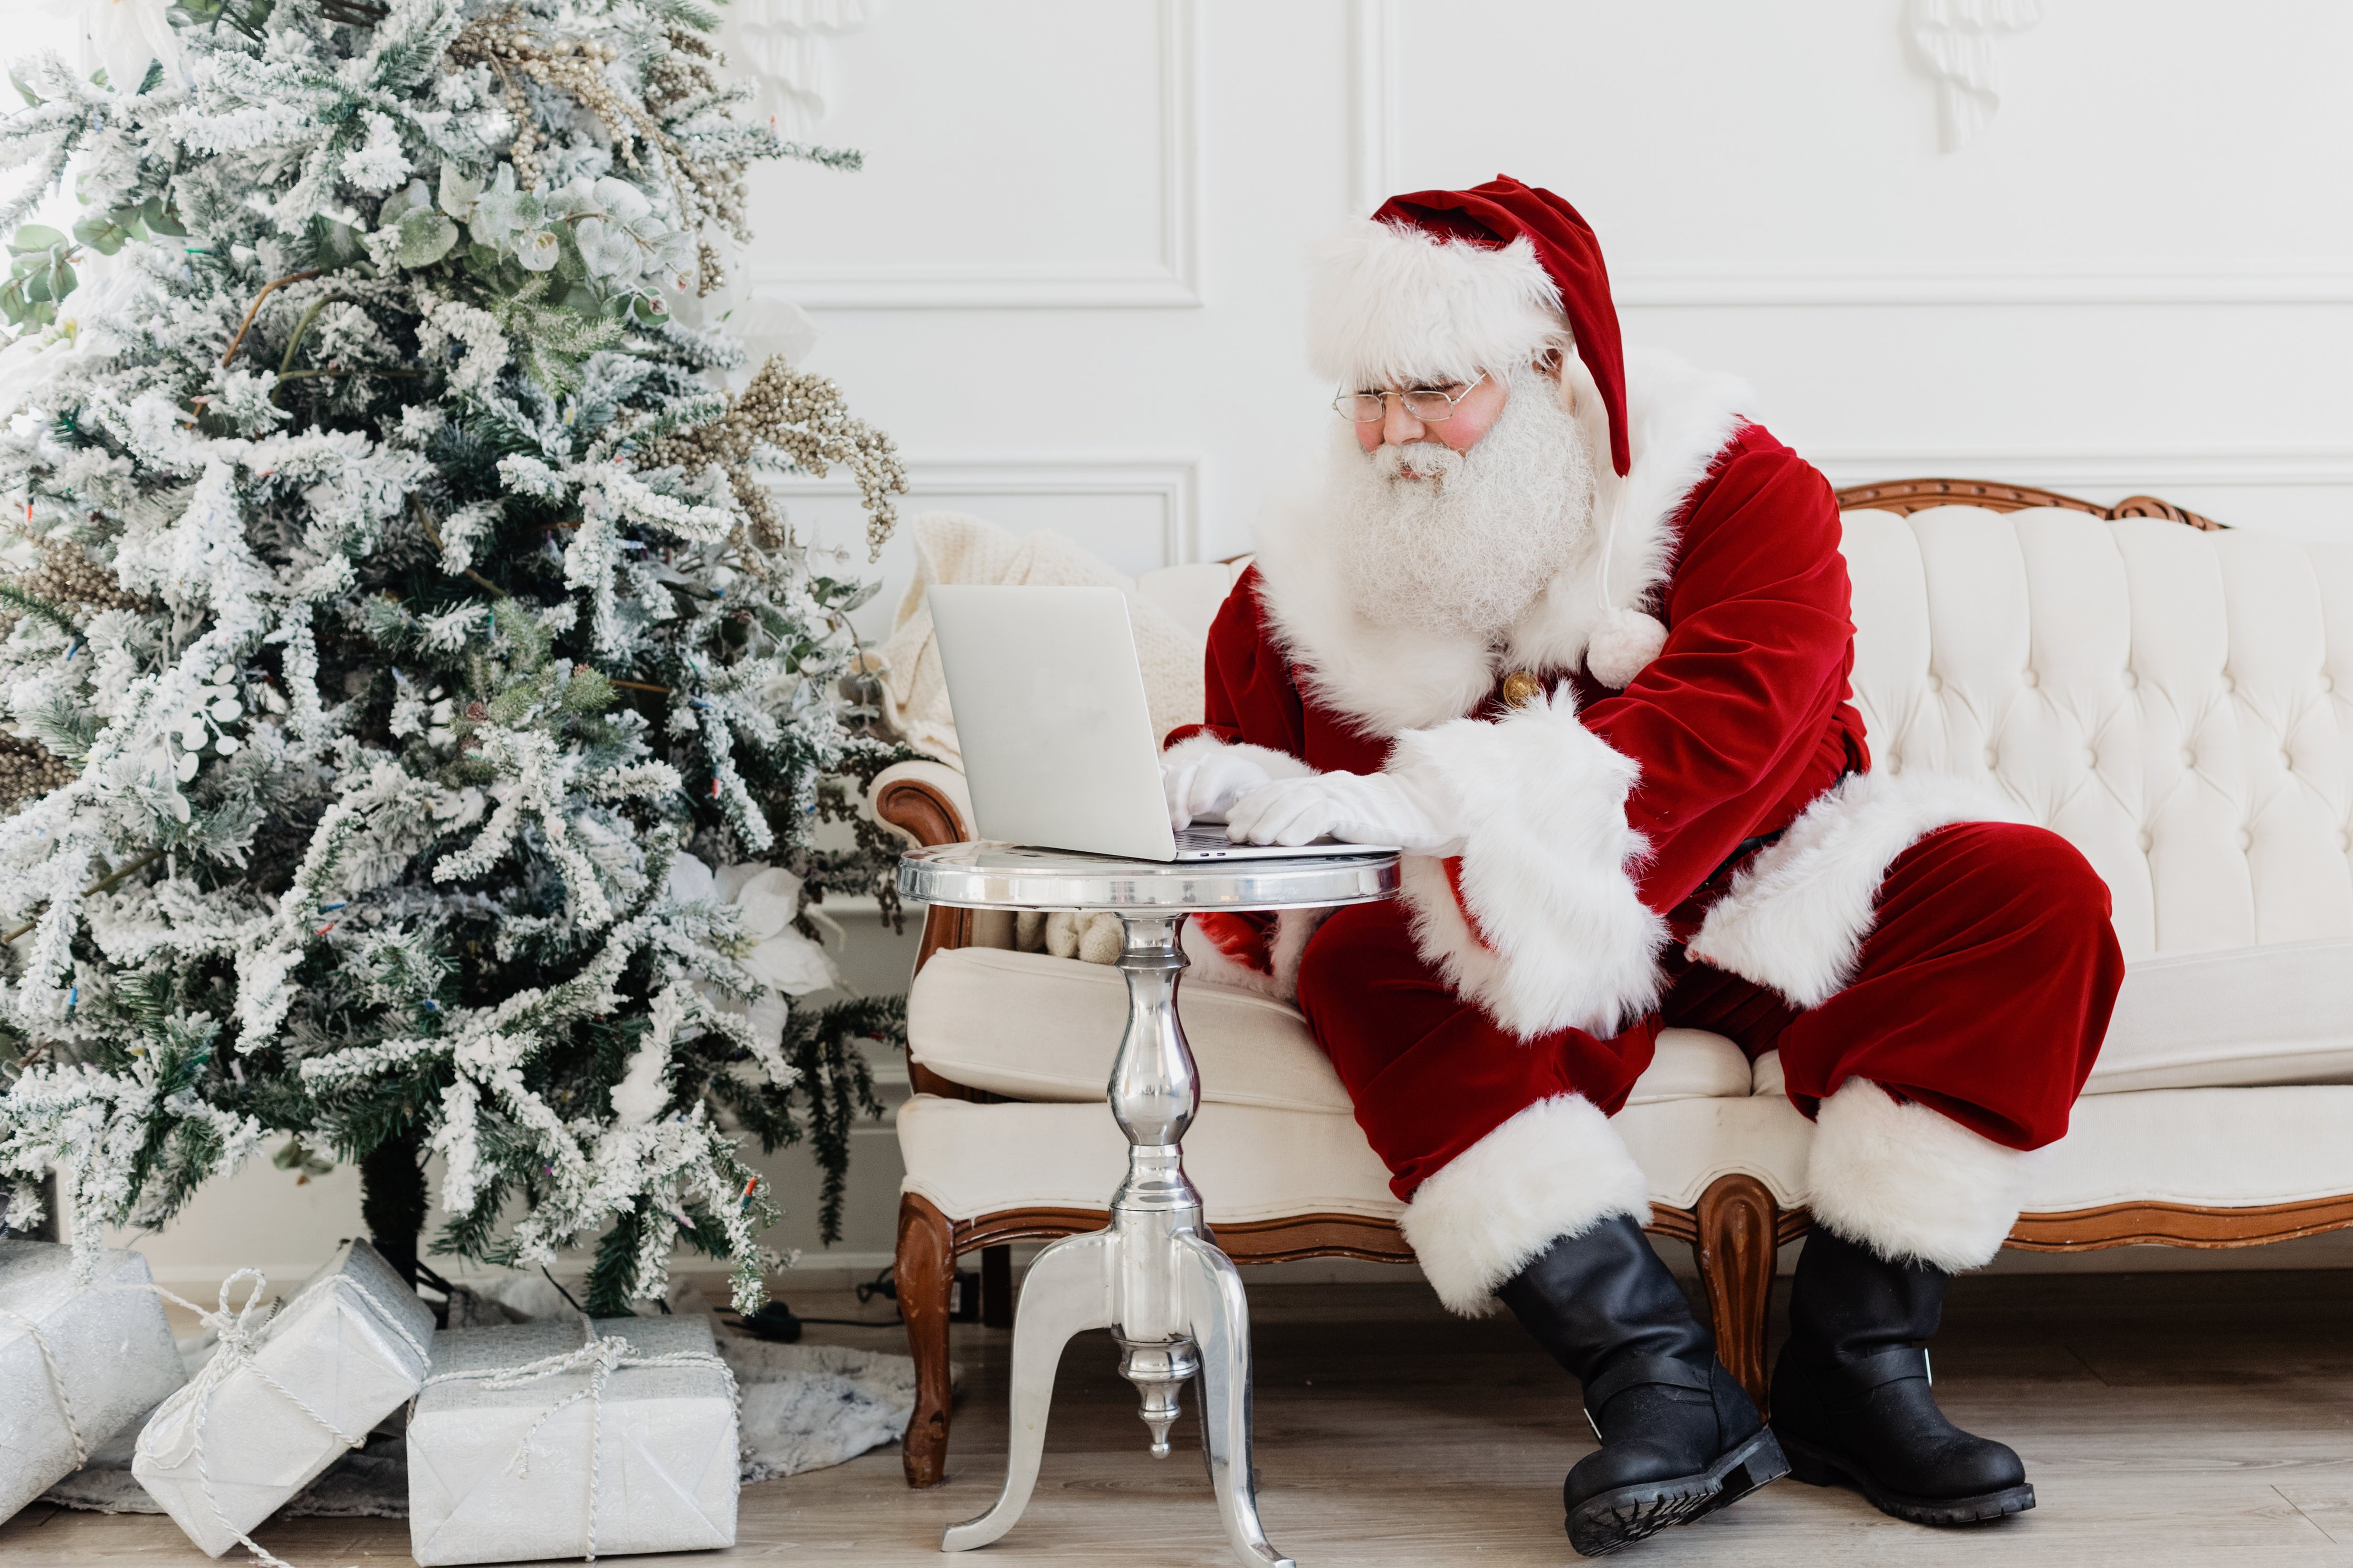 Santa Invented Real-Time Feedback